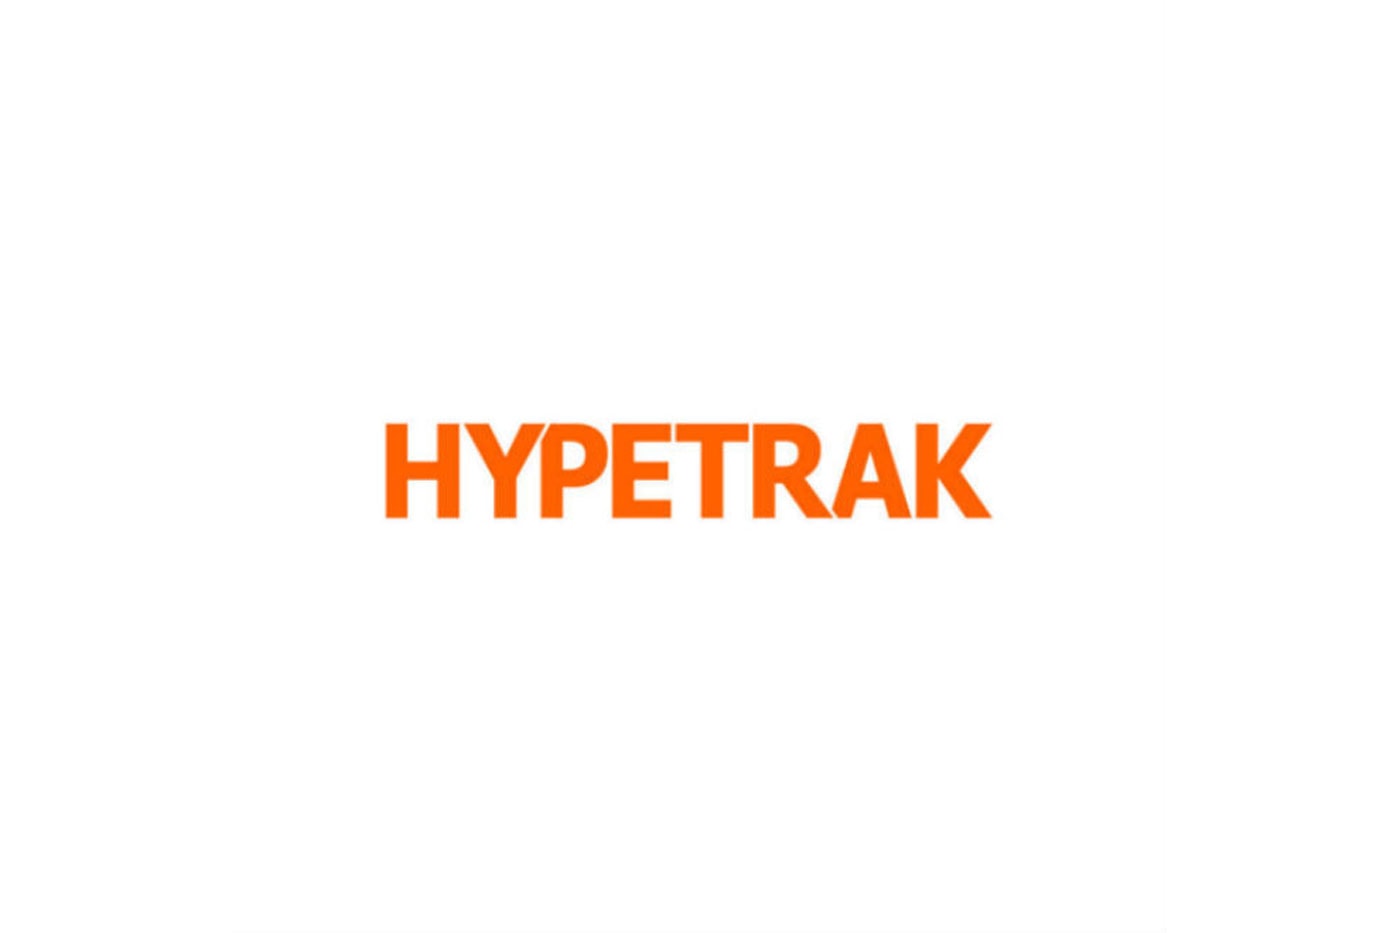 HYPETRAK Becomes HYPEBEAST MUSIC